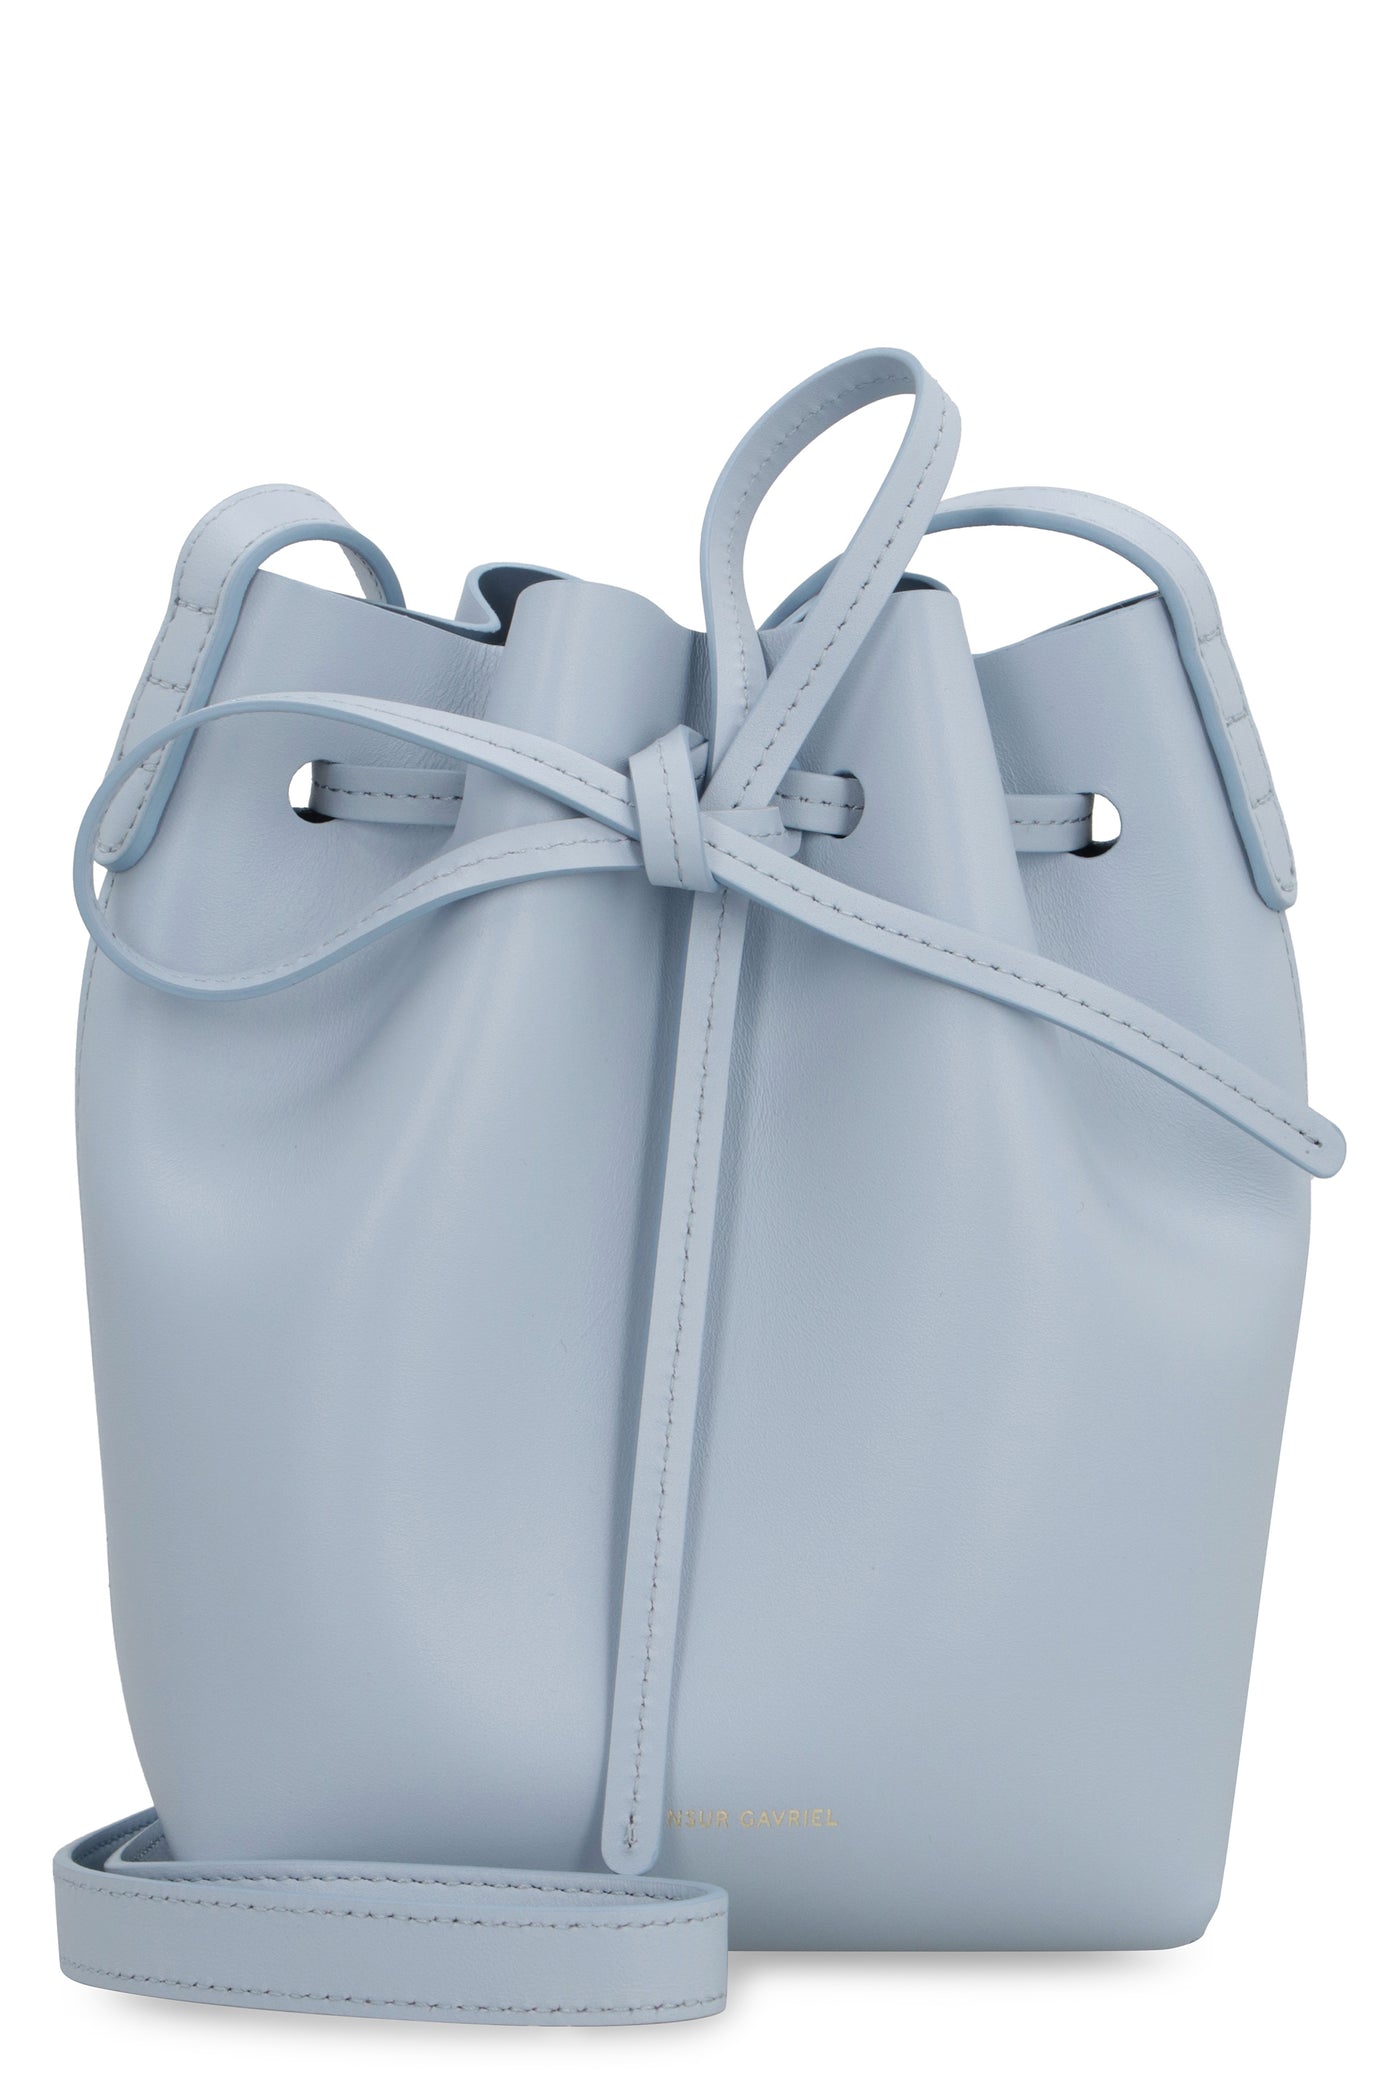 Mansur Gavriel Mini Metallic Leather Bucket Bag